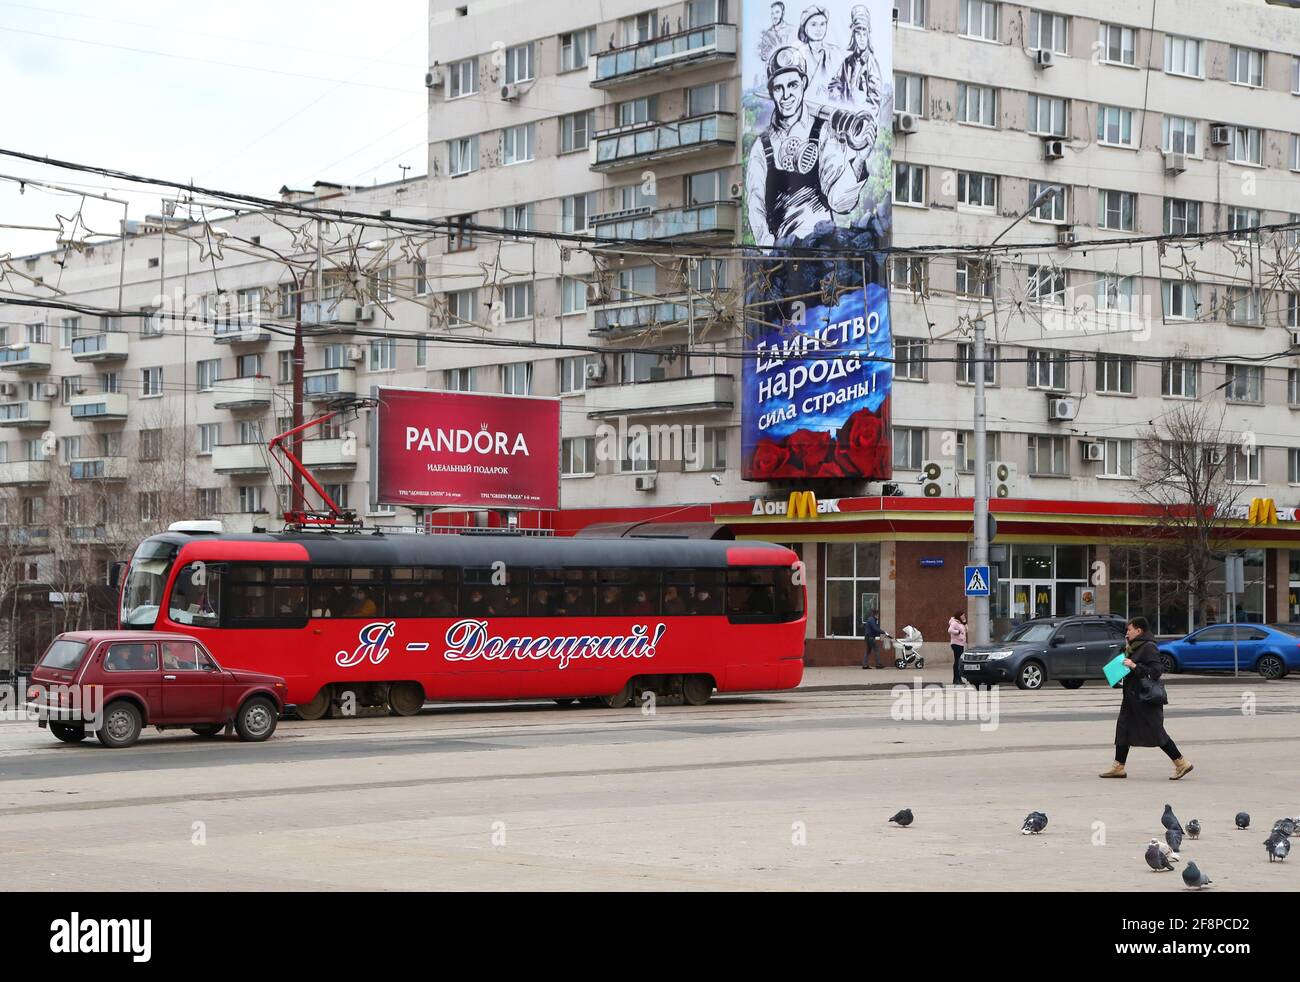 donetsk-ukraine-14th-apr-2021-a-ya-donetsky-i-am-from-donetsk-streetcar-is-pictured-in-a-street-credit-valentin-sprinchaktassalamy-live-news-2F8PCD2.jpg